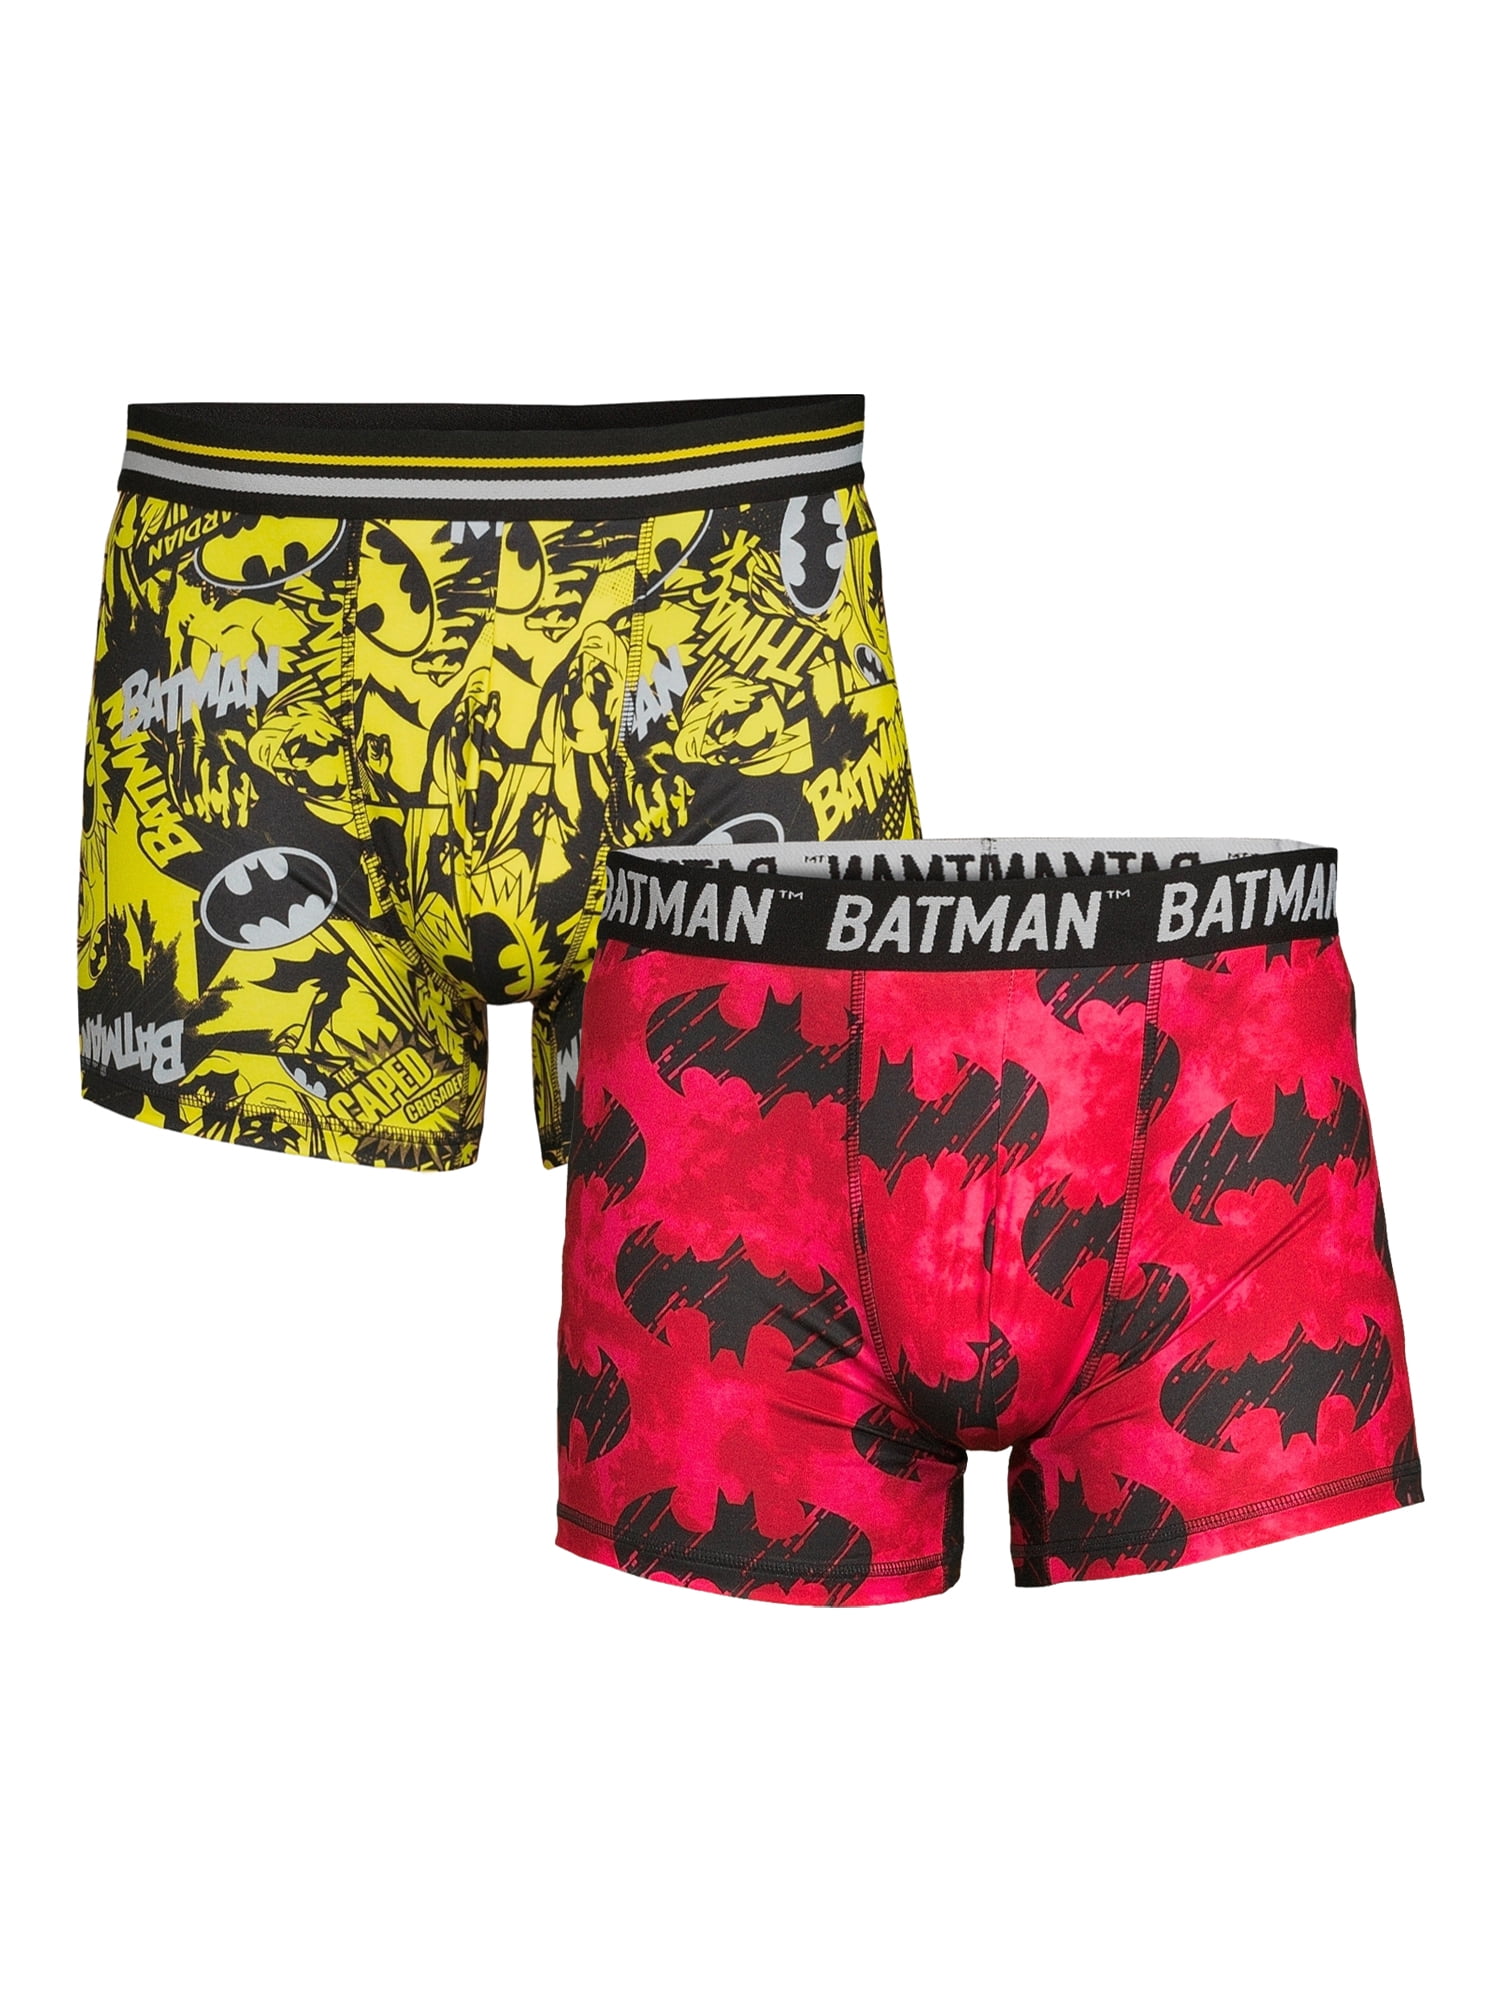 Boxers Incredible Hulk Underwear